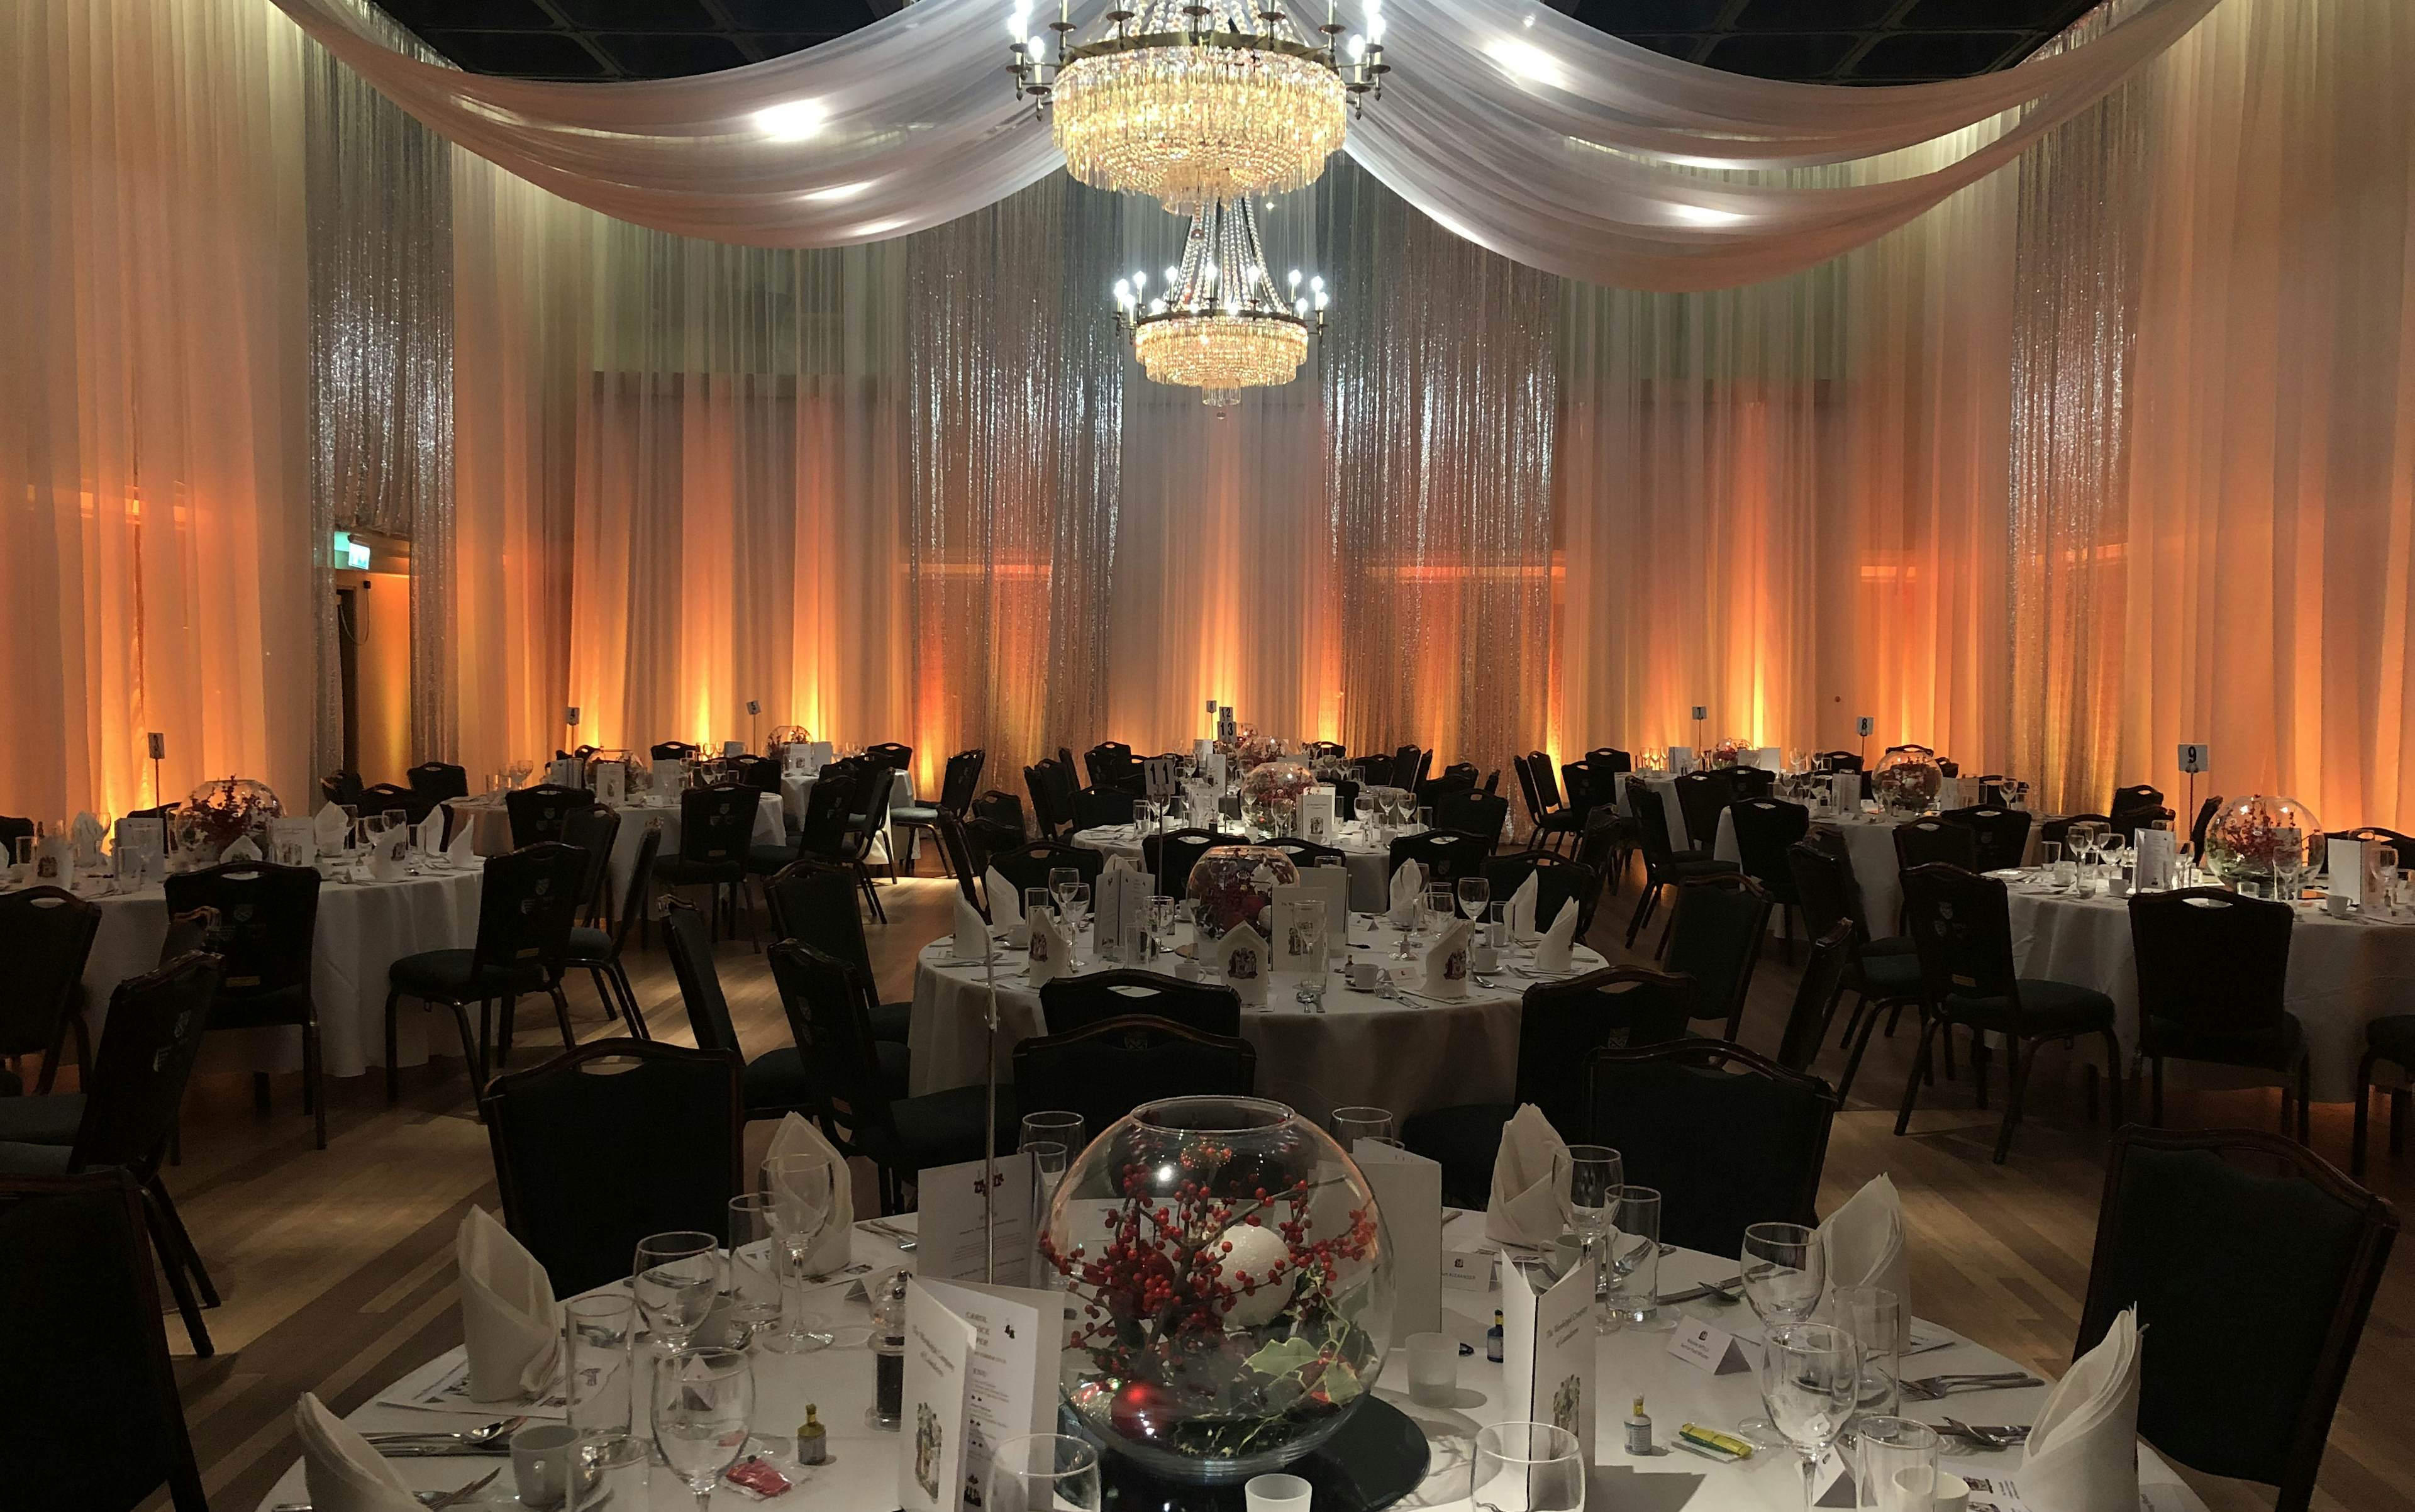 Glaziers Hall - Banqueting Hall image 1